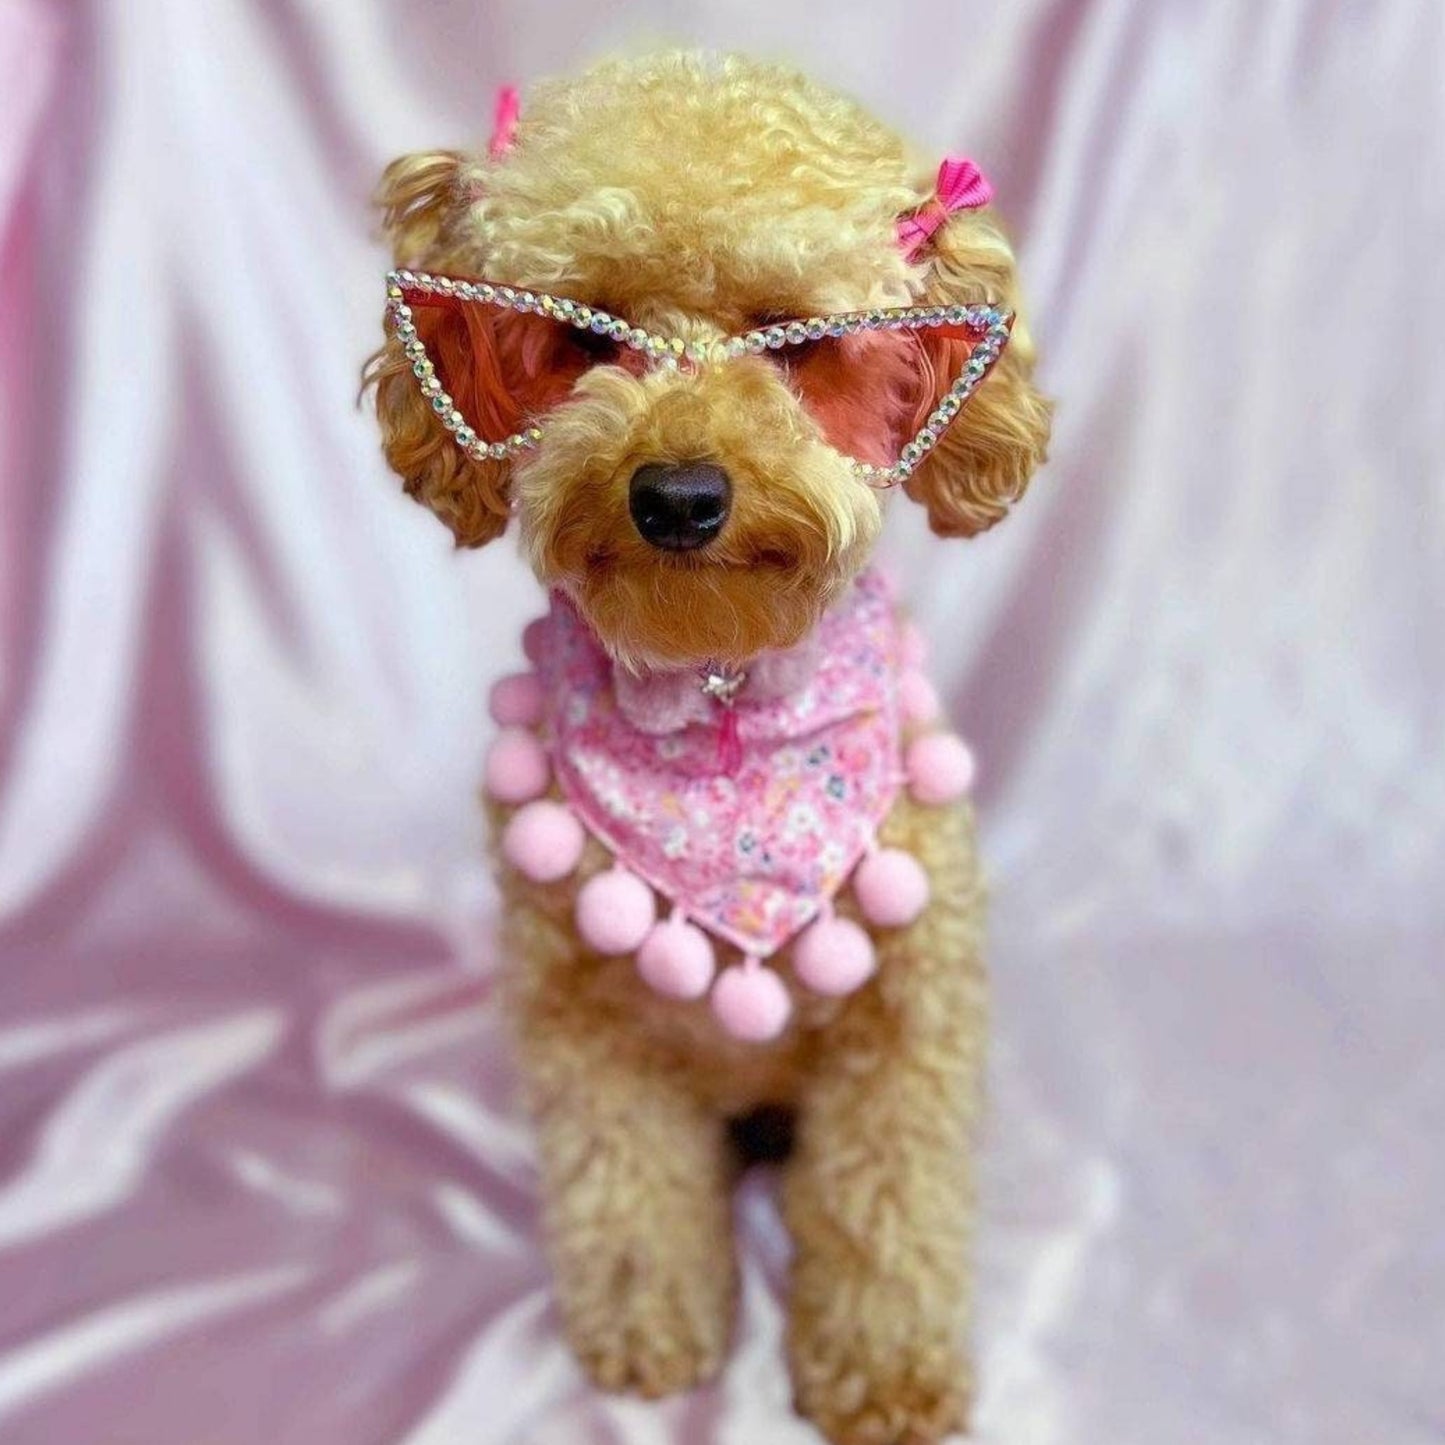 Dog Bandana Pink Floral Fabric with Pom Pom Trim and Cute Faux Fur Bow with Rhinestone Centre Dog Birthday Gift Tie on Bandana